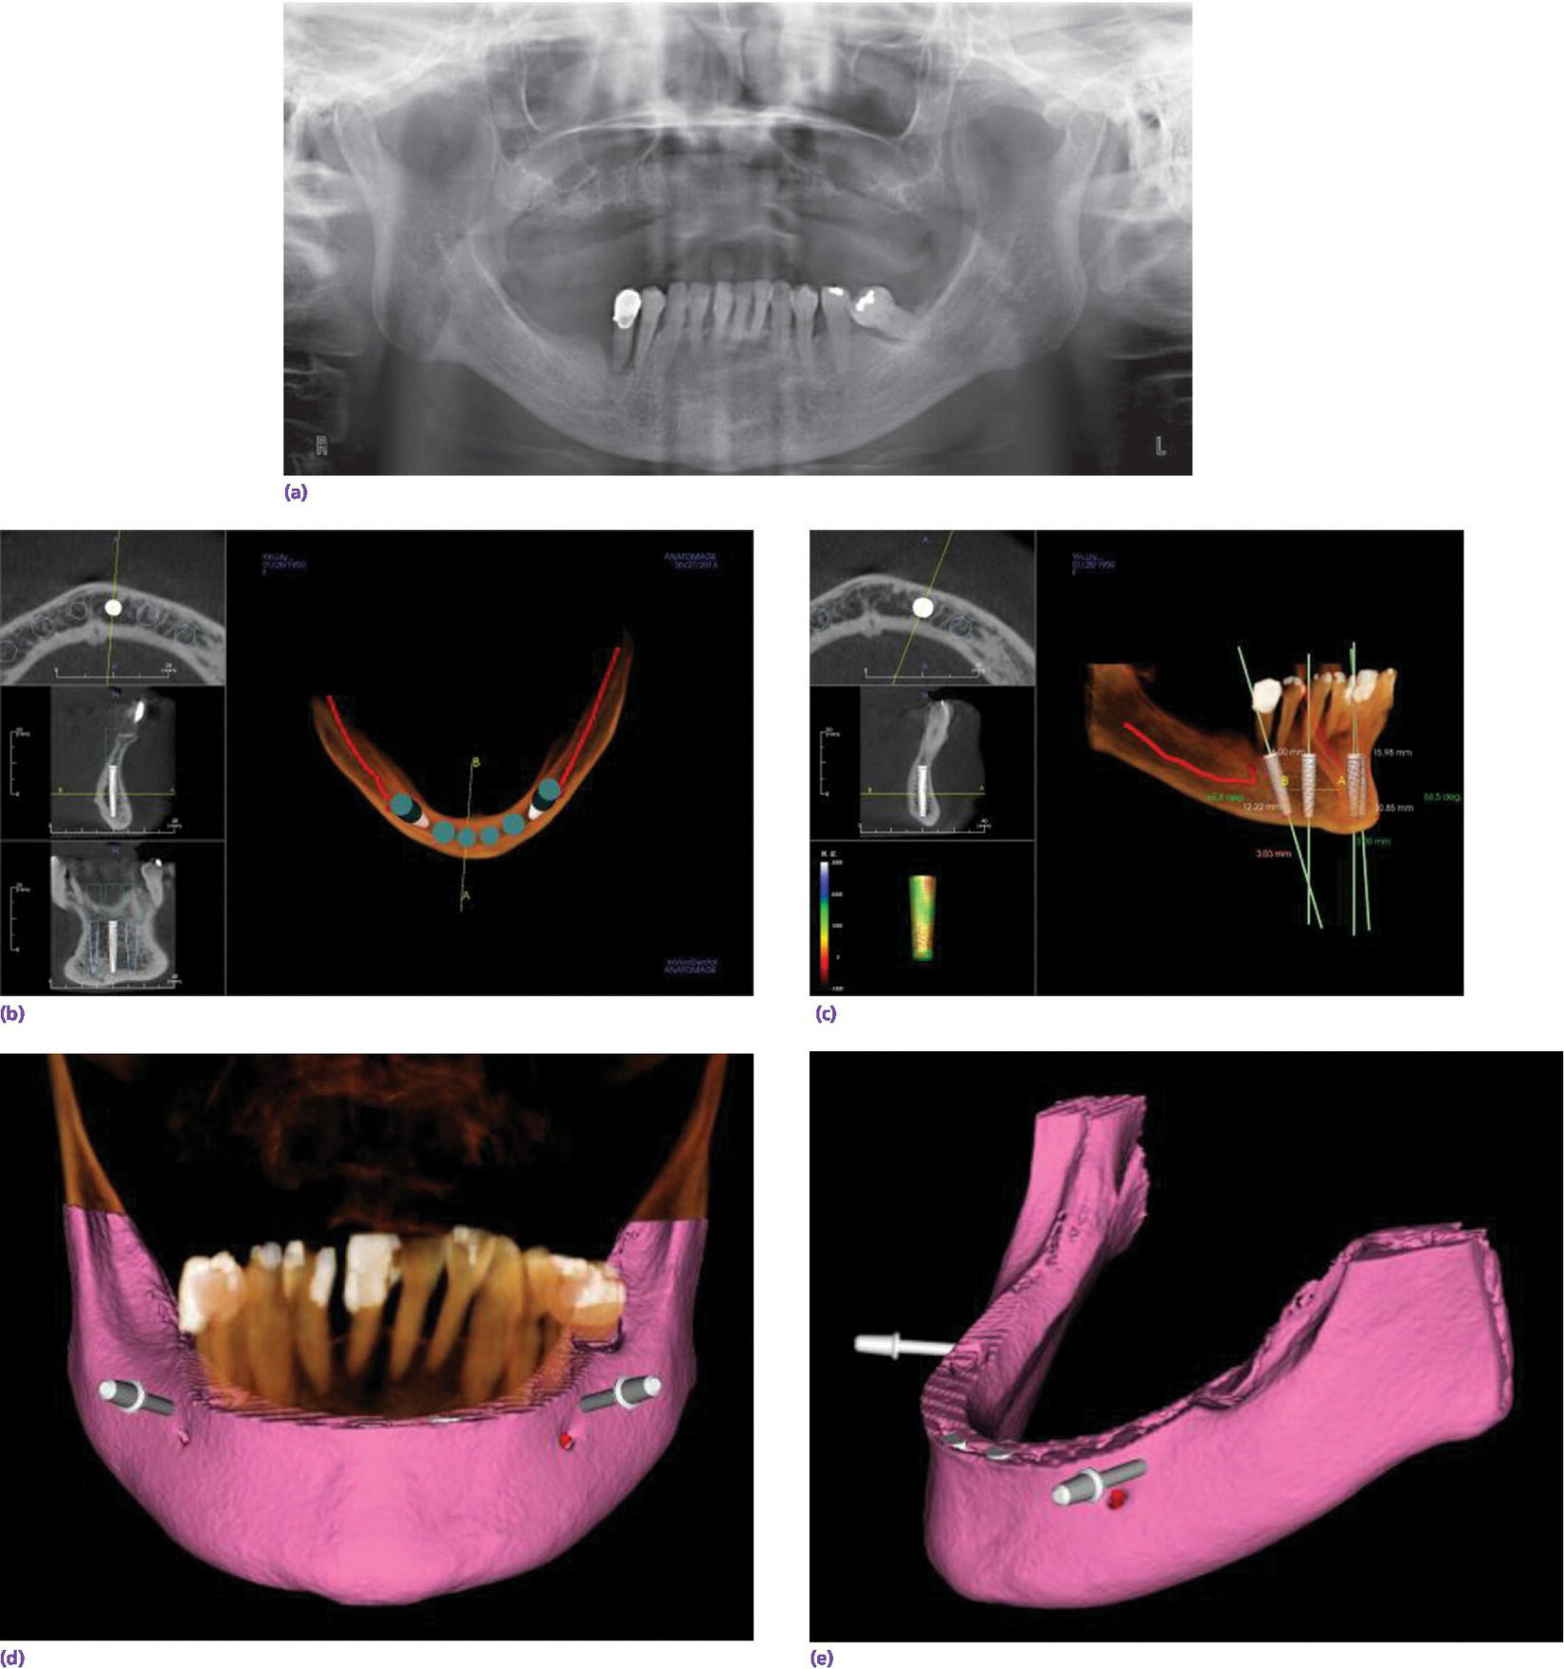 Radiograph displaying preoperative orthopantomogram of edentulous maxilla and terminal mandibular dentition.